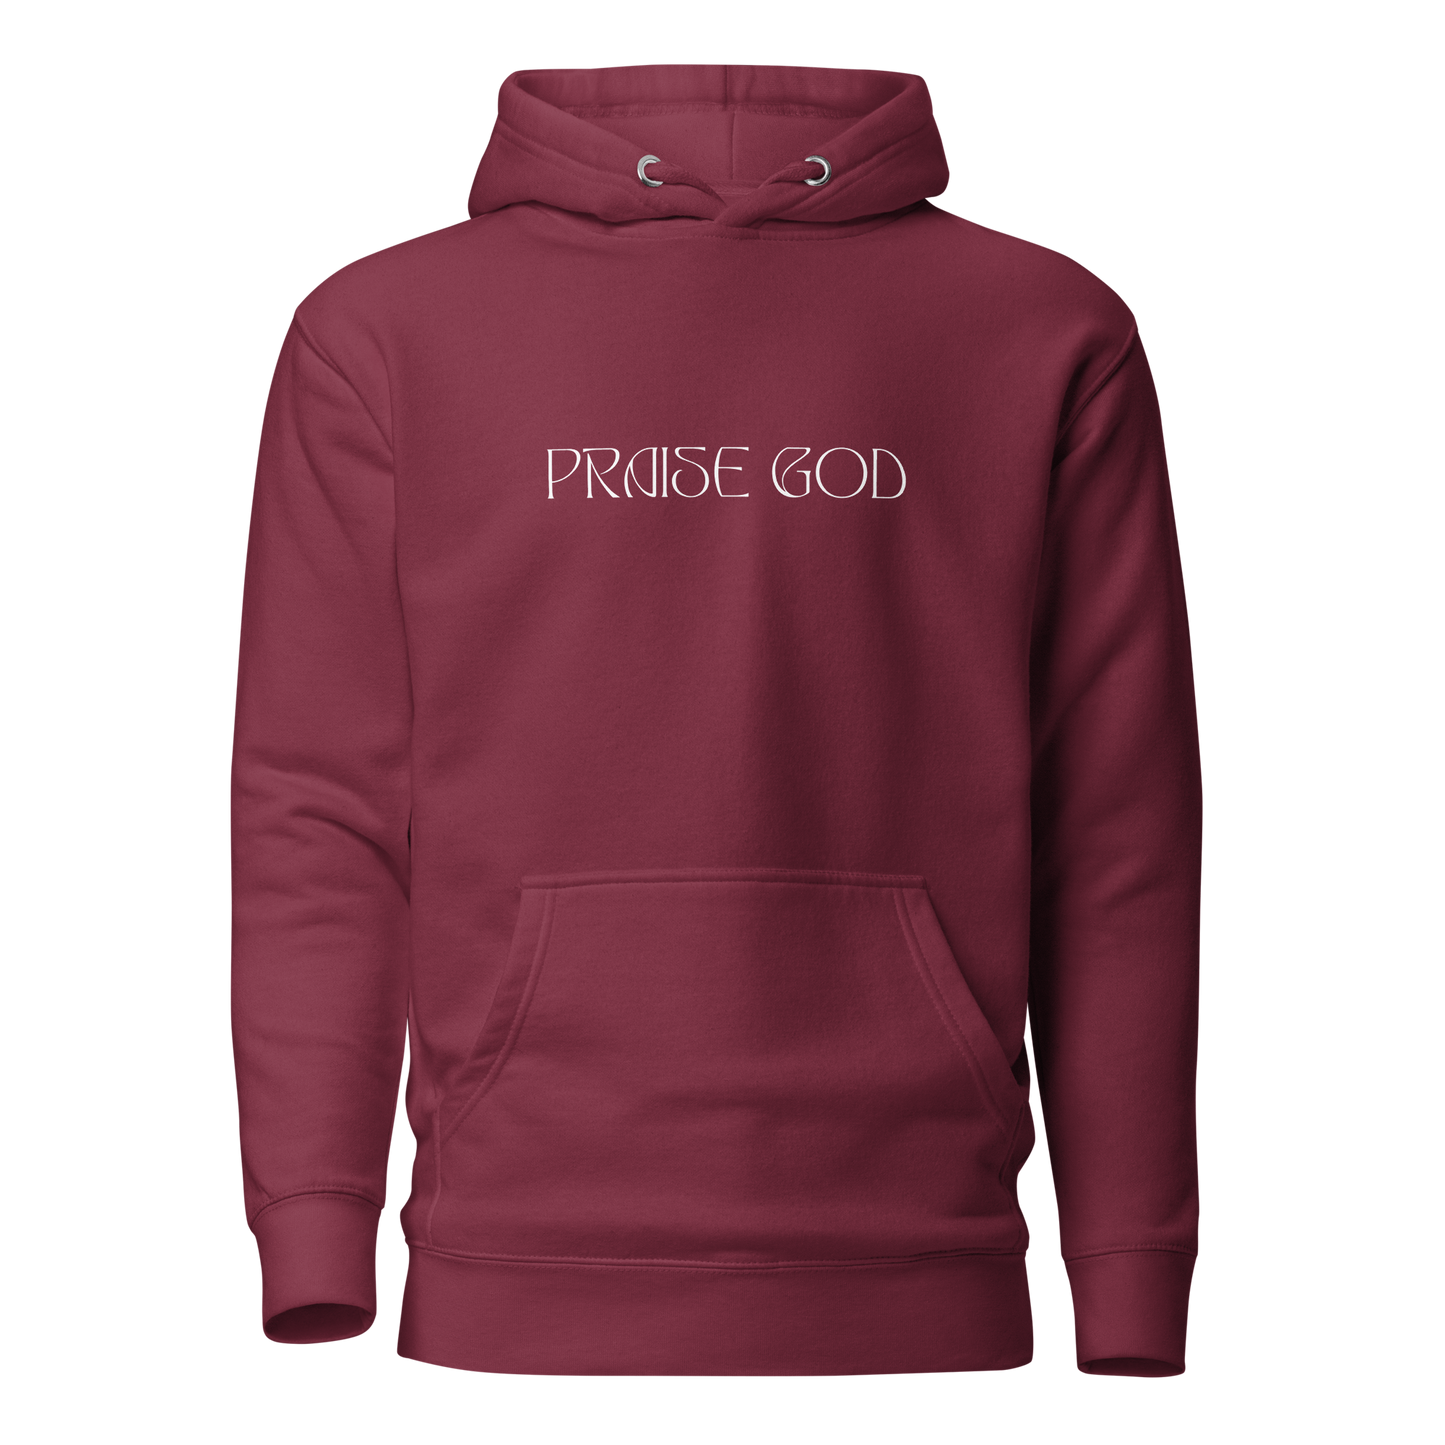 Praise God Hooded Sweatshirt